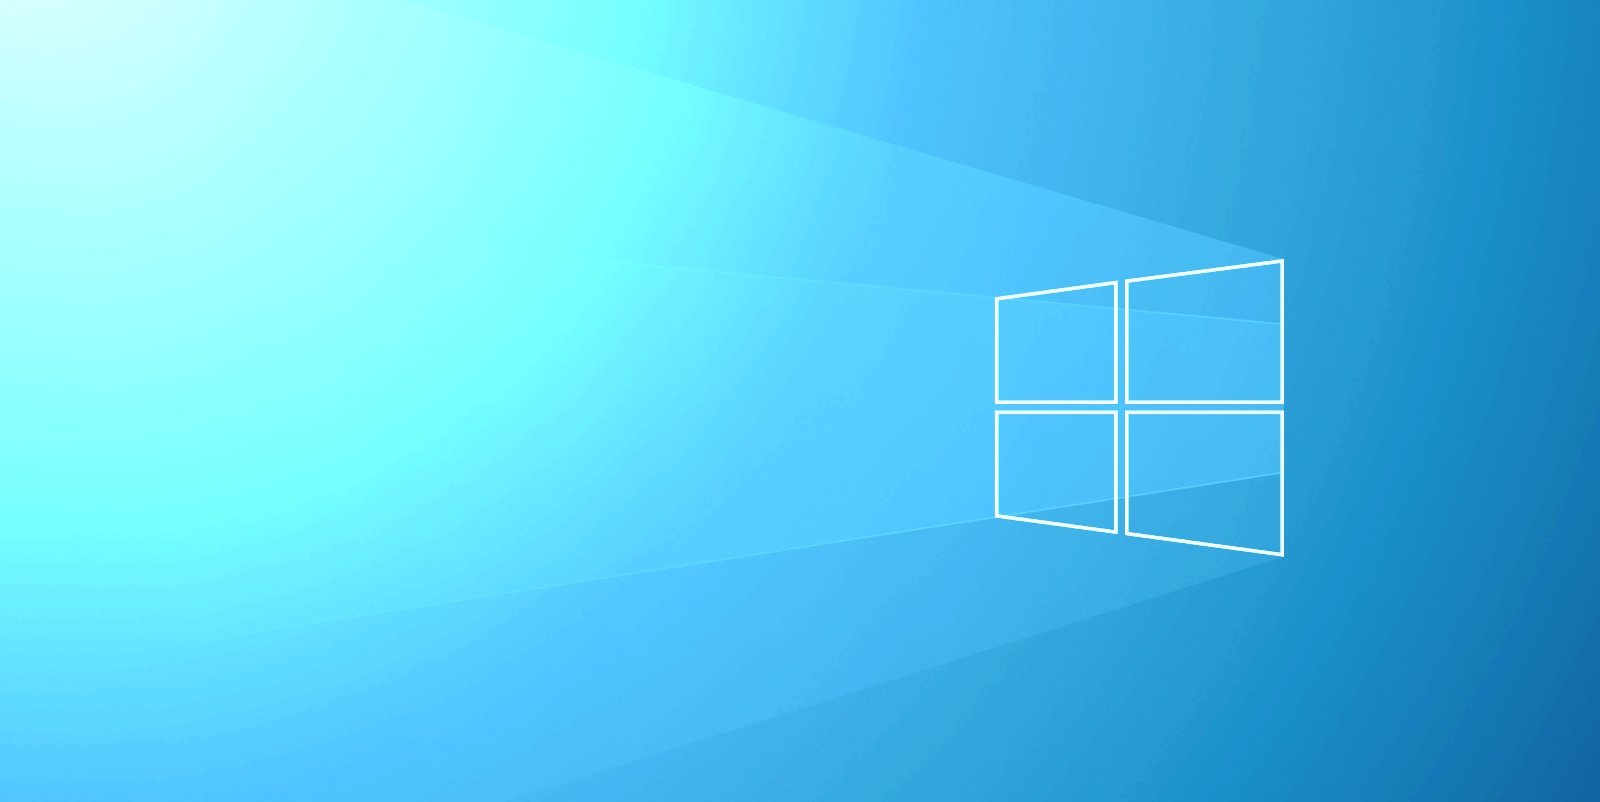 How To Mitigate Print Spooler Vulnerability On Windows 10